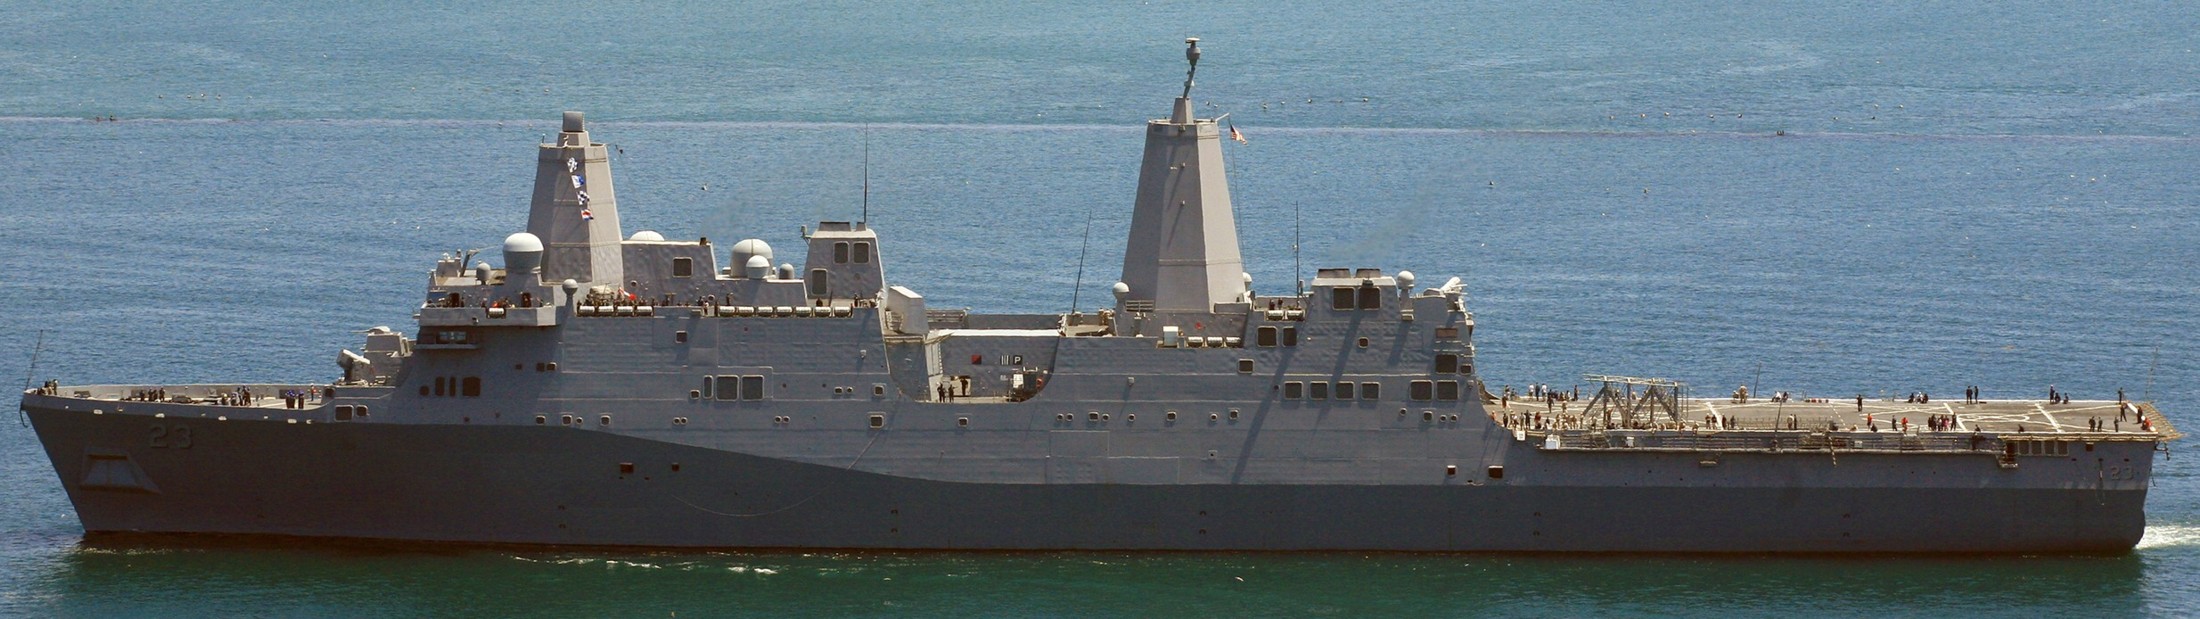 lpd-23 uss anchorage san antonio class amphibious transport dock ship navy 84